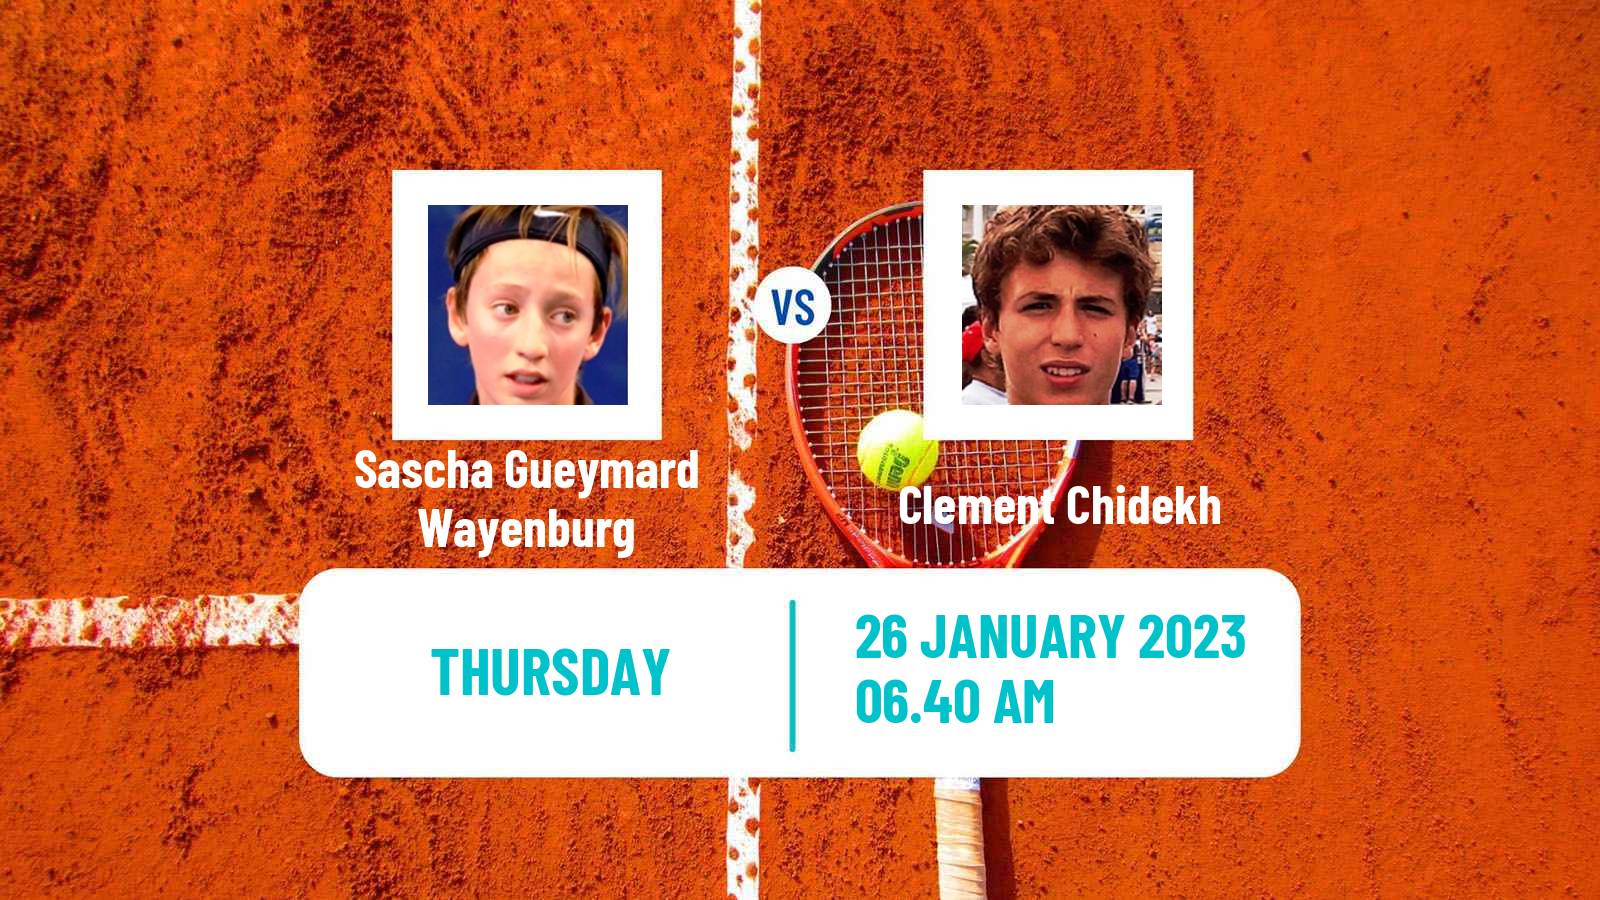 Tennis ITF Tournaments Sascha Gueymard Wayenburg - Clement Chidekh